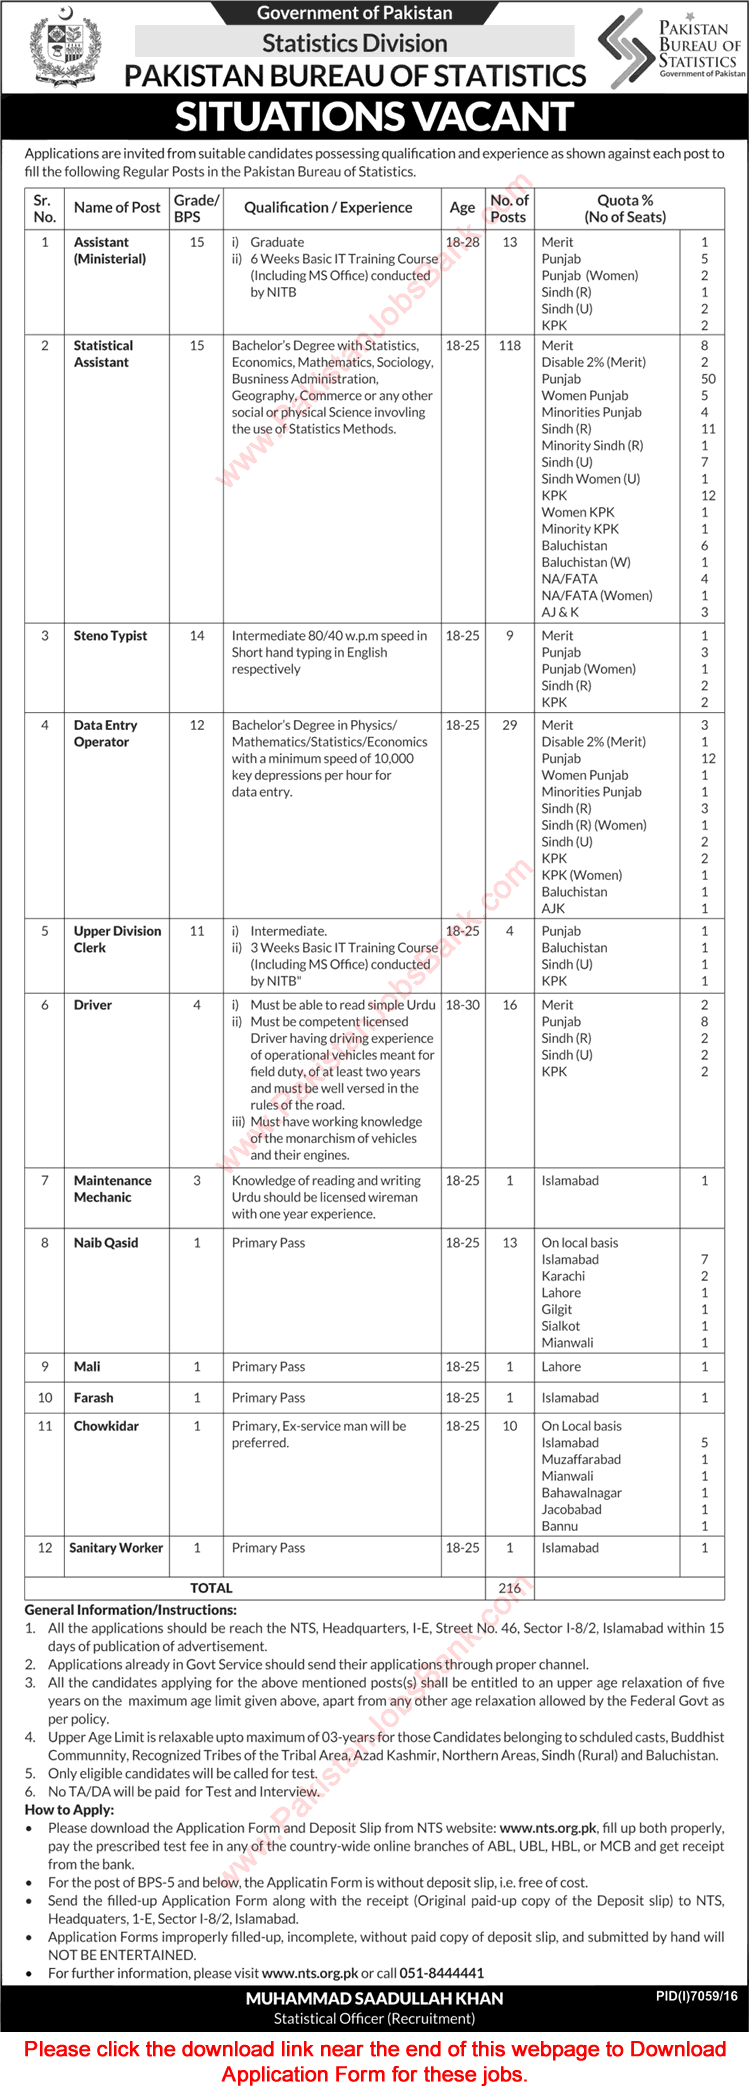 Pakistan Bureau of Statistics Jobs June 2017 NTS Application Form Statistical Assistants, DEO & Others Latest